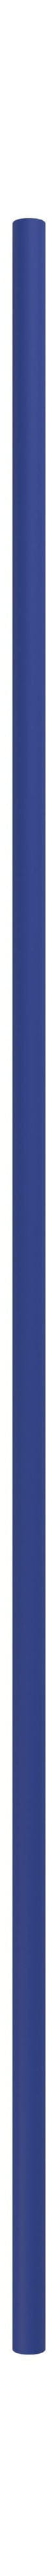 Moebe Shelving System/Wall Shelving Leg 115 Cm, Deep Blue